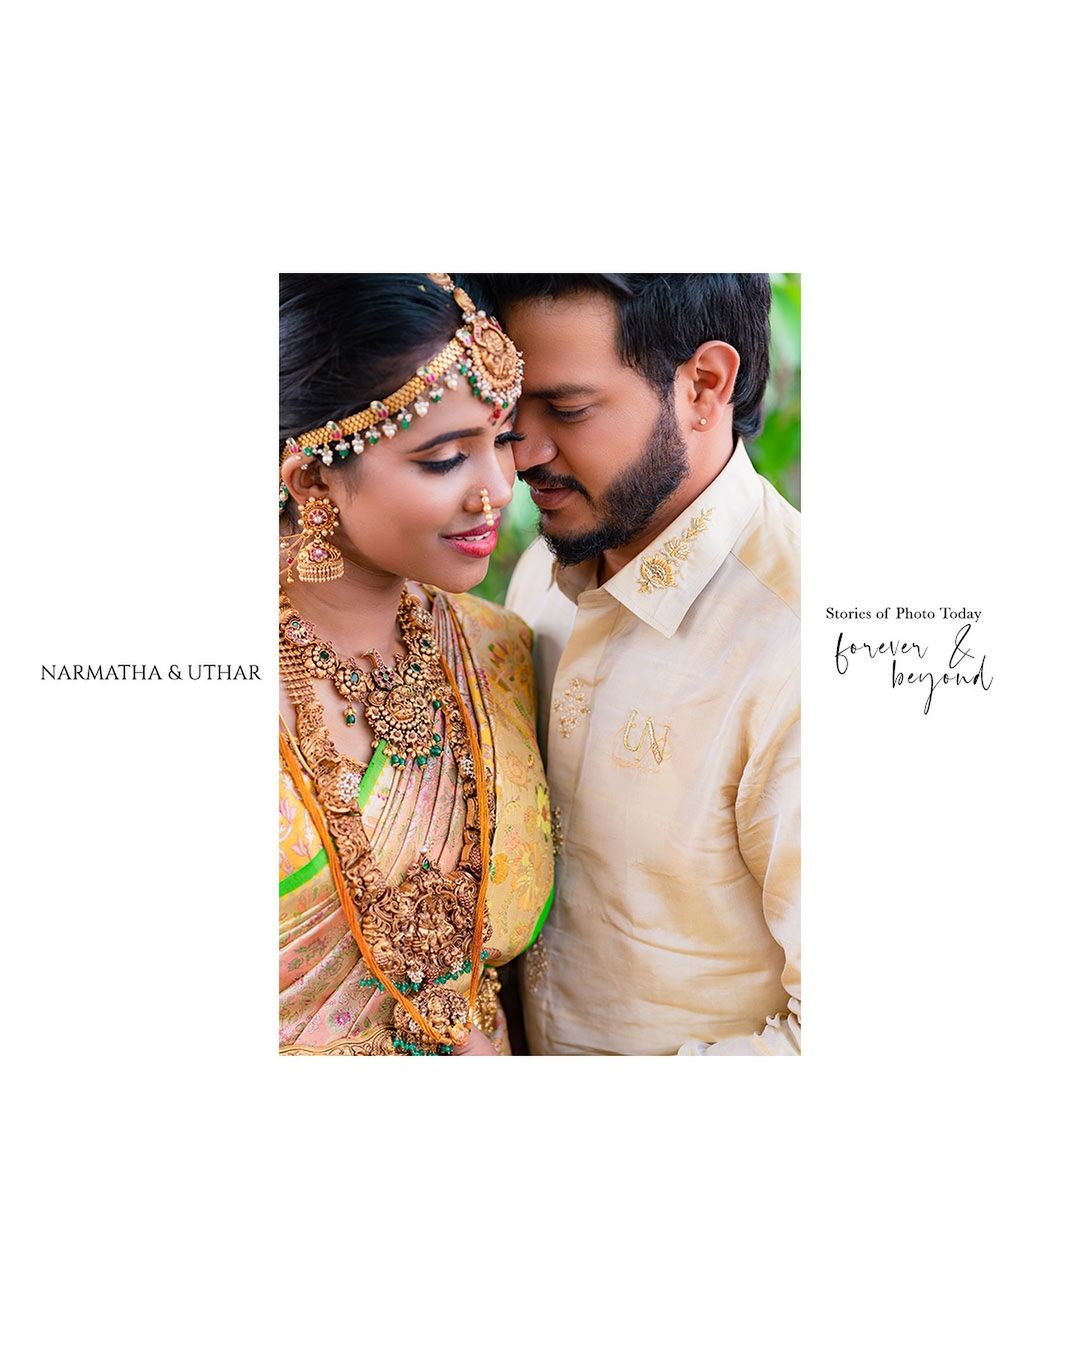 Narmatha Shree Manie & Utharraj's Timeless Couple Portrait by The Photo Today